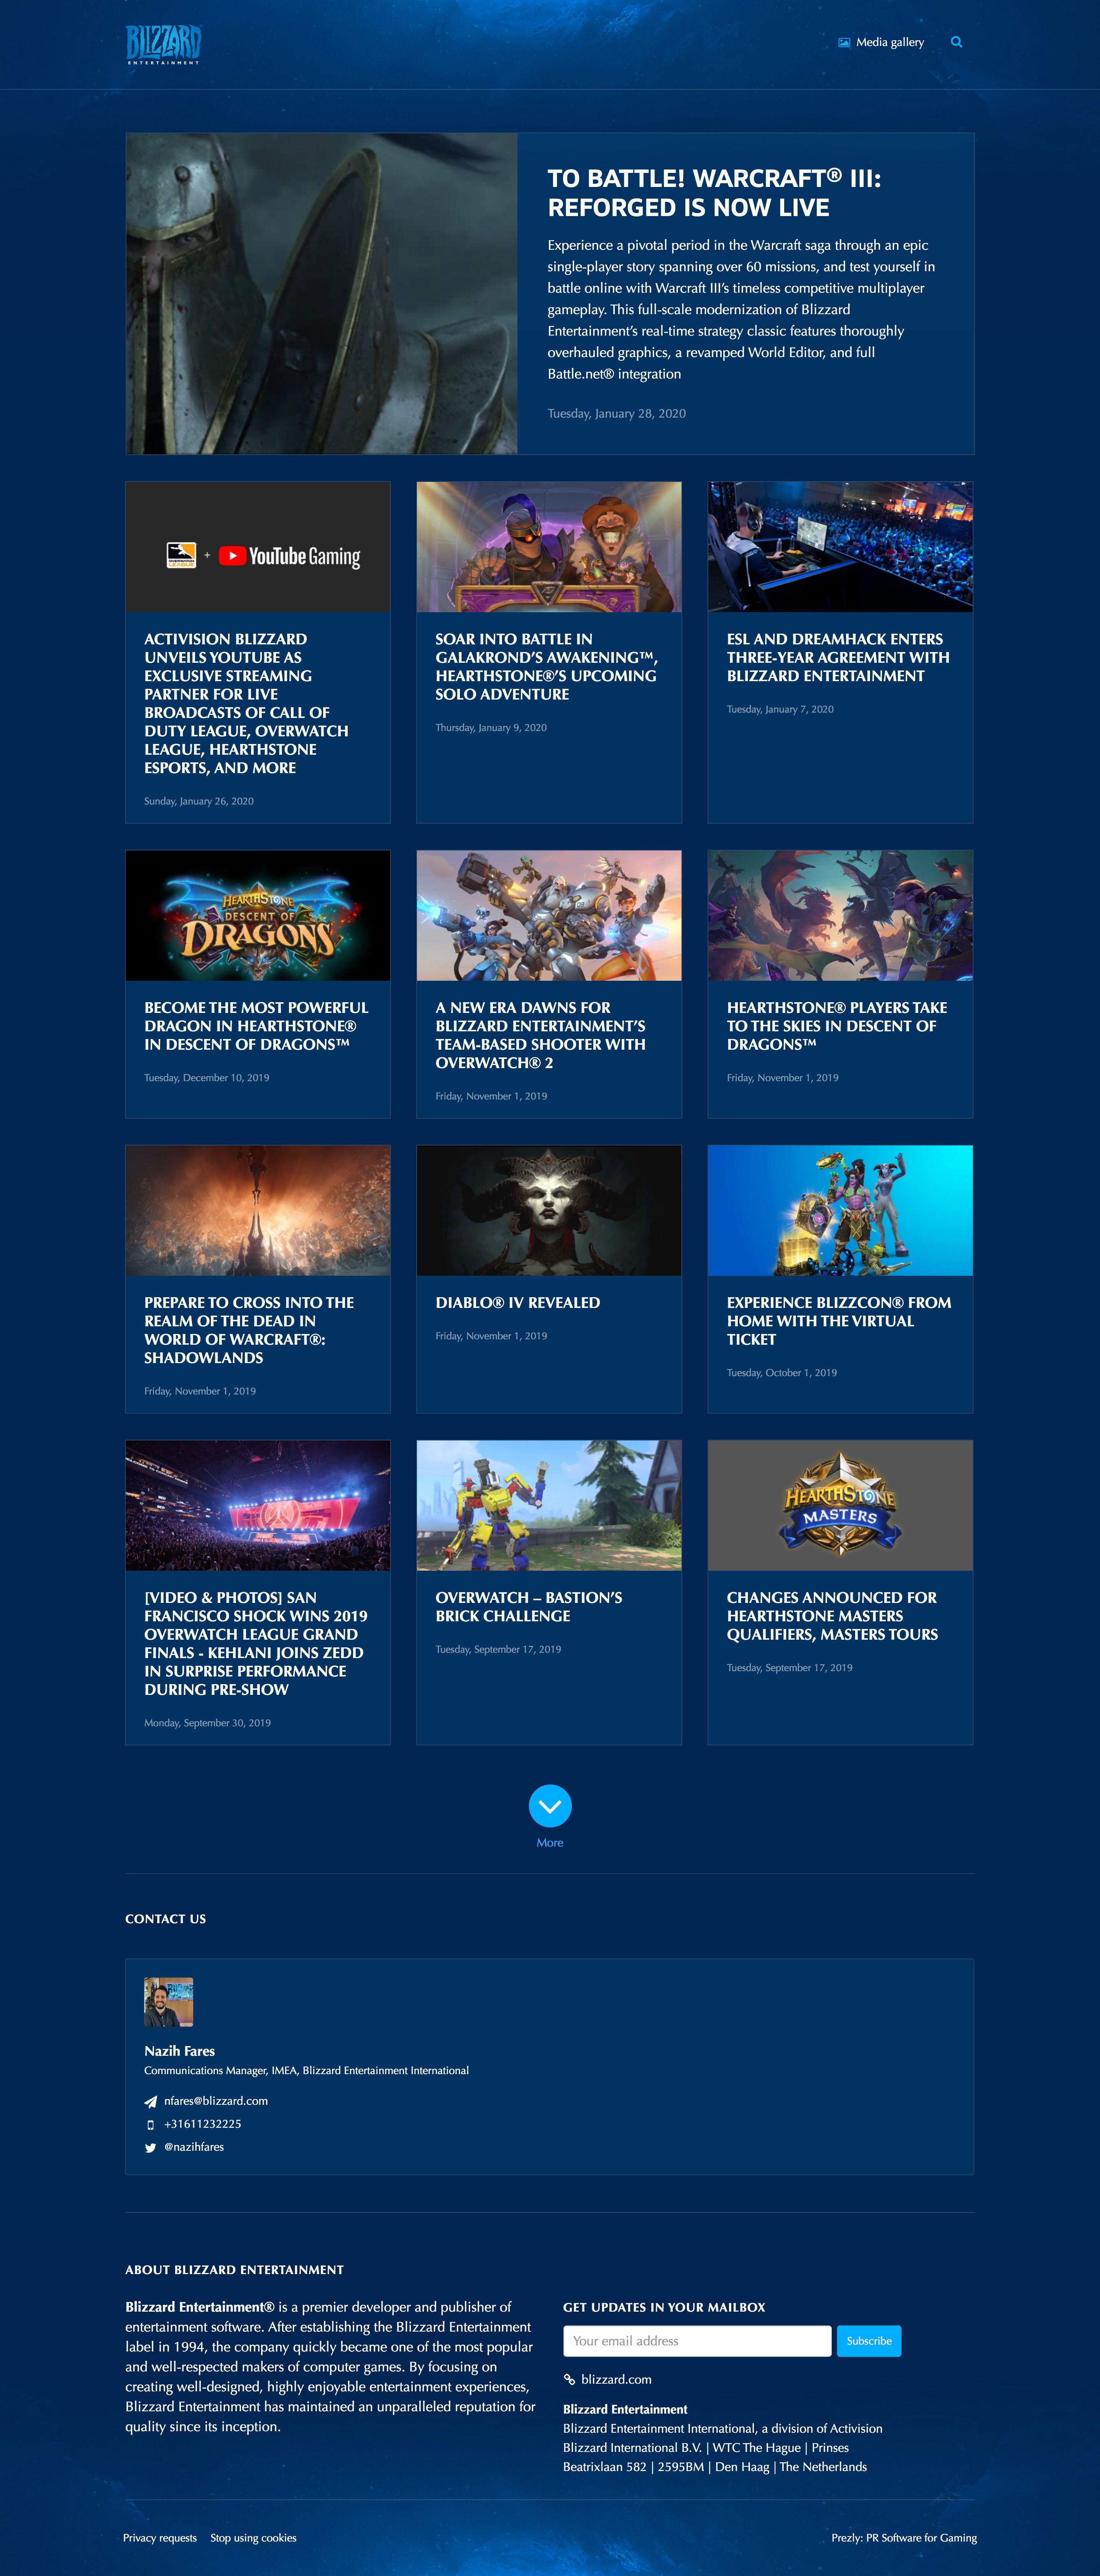 Blizzard Entertainment's online newsroom